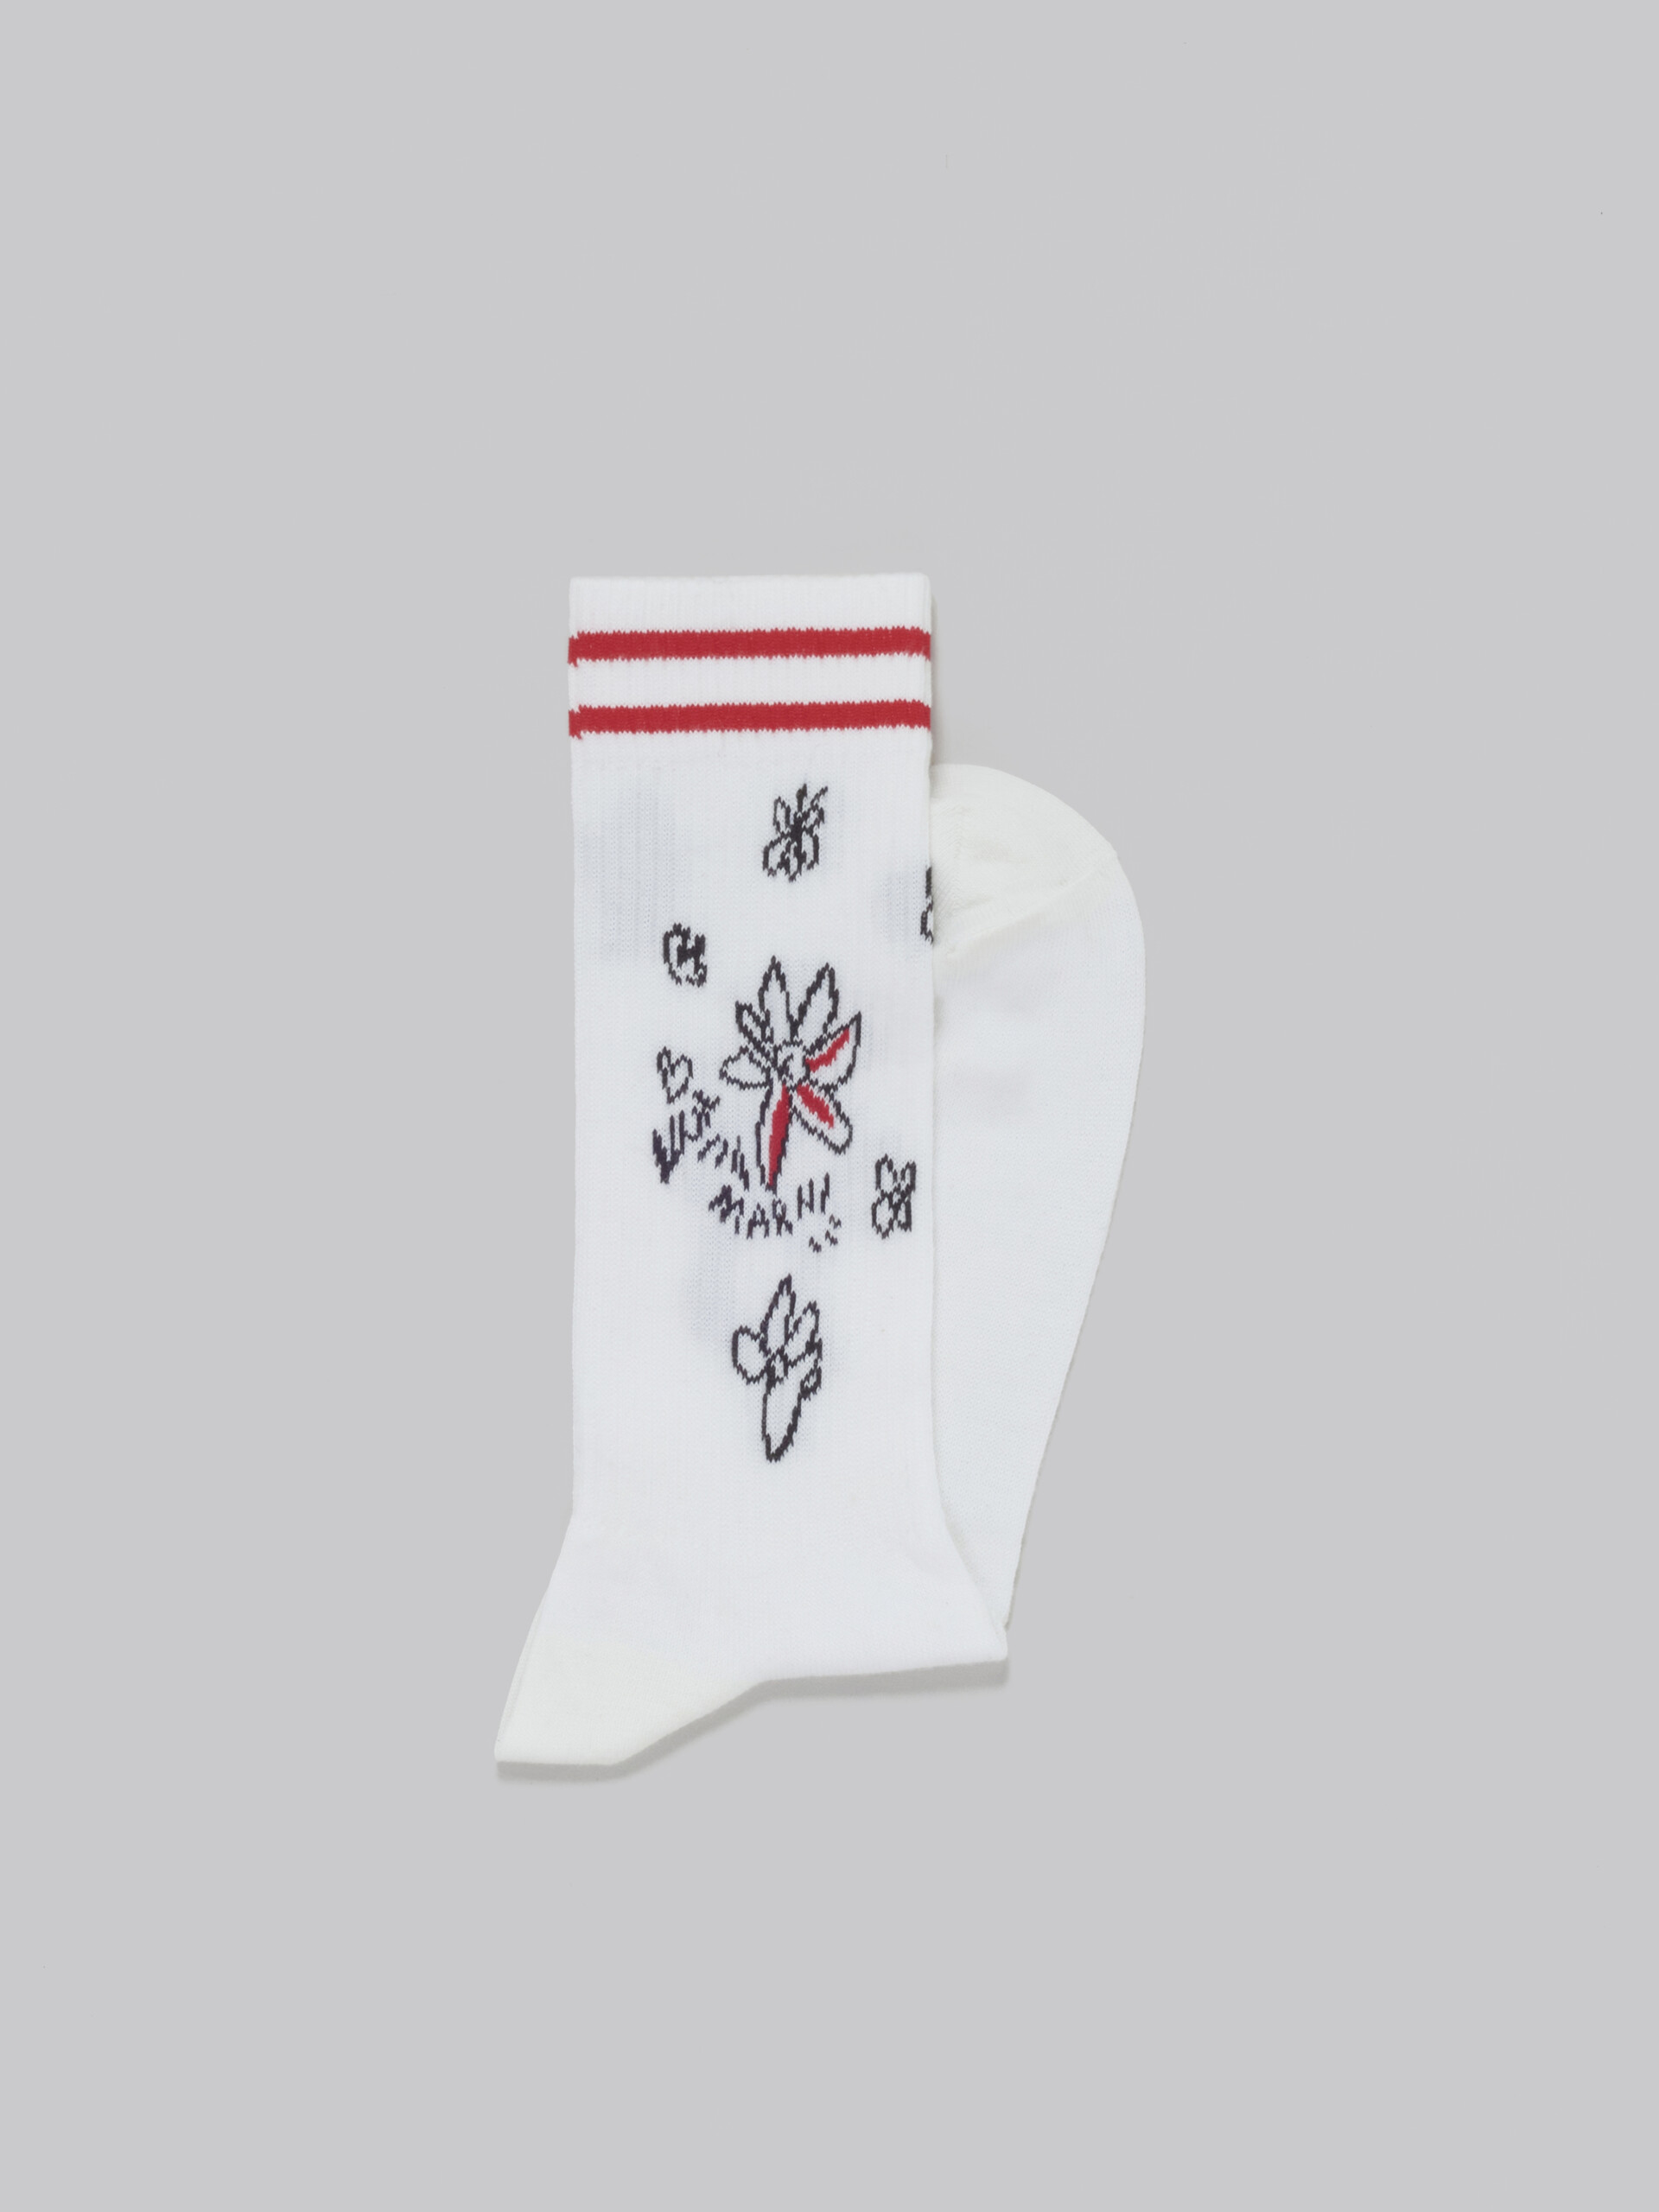 White socks with Day Dreaming floral design - Socks - Image 2